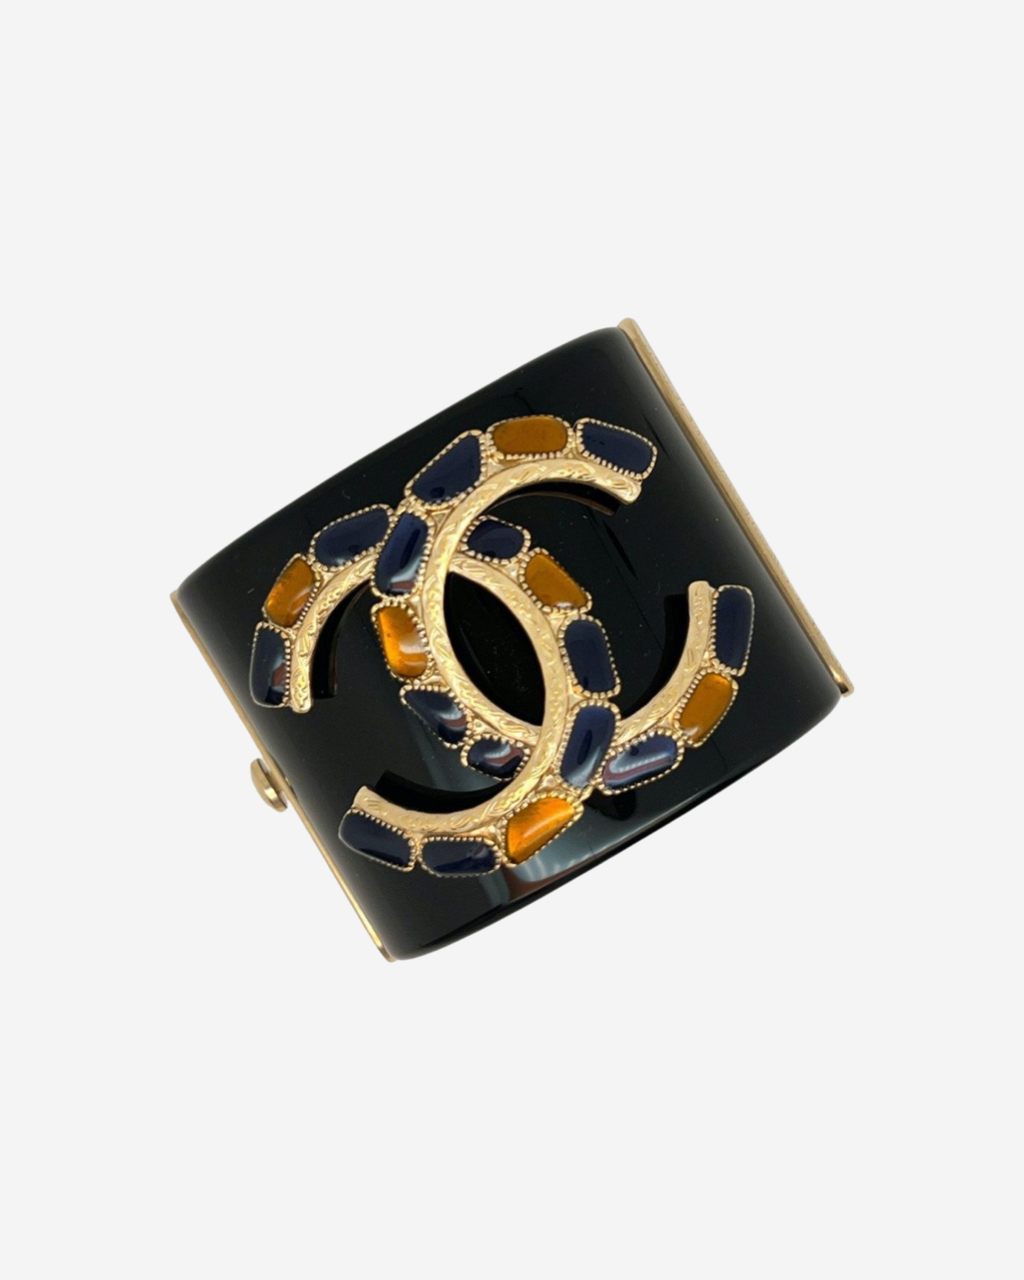 Chanel bracelet